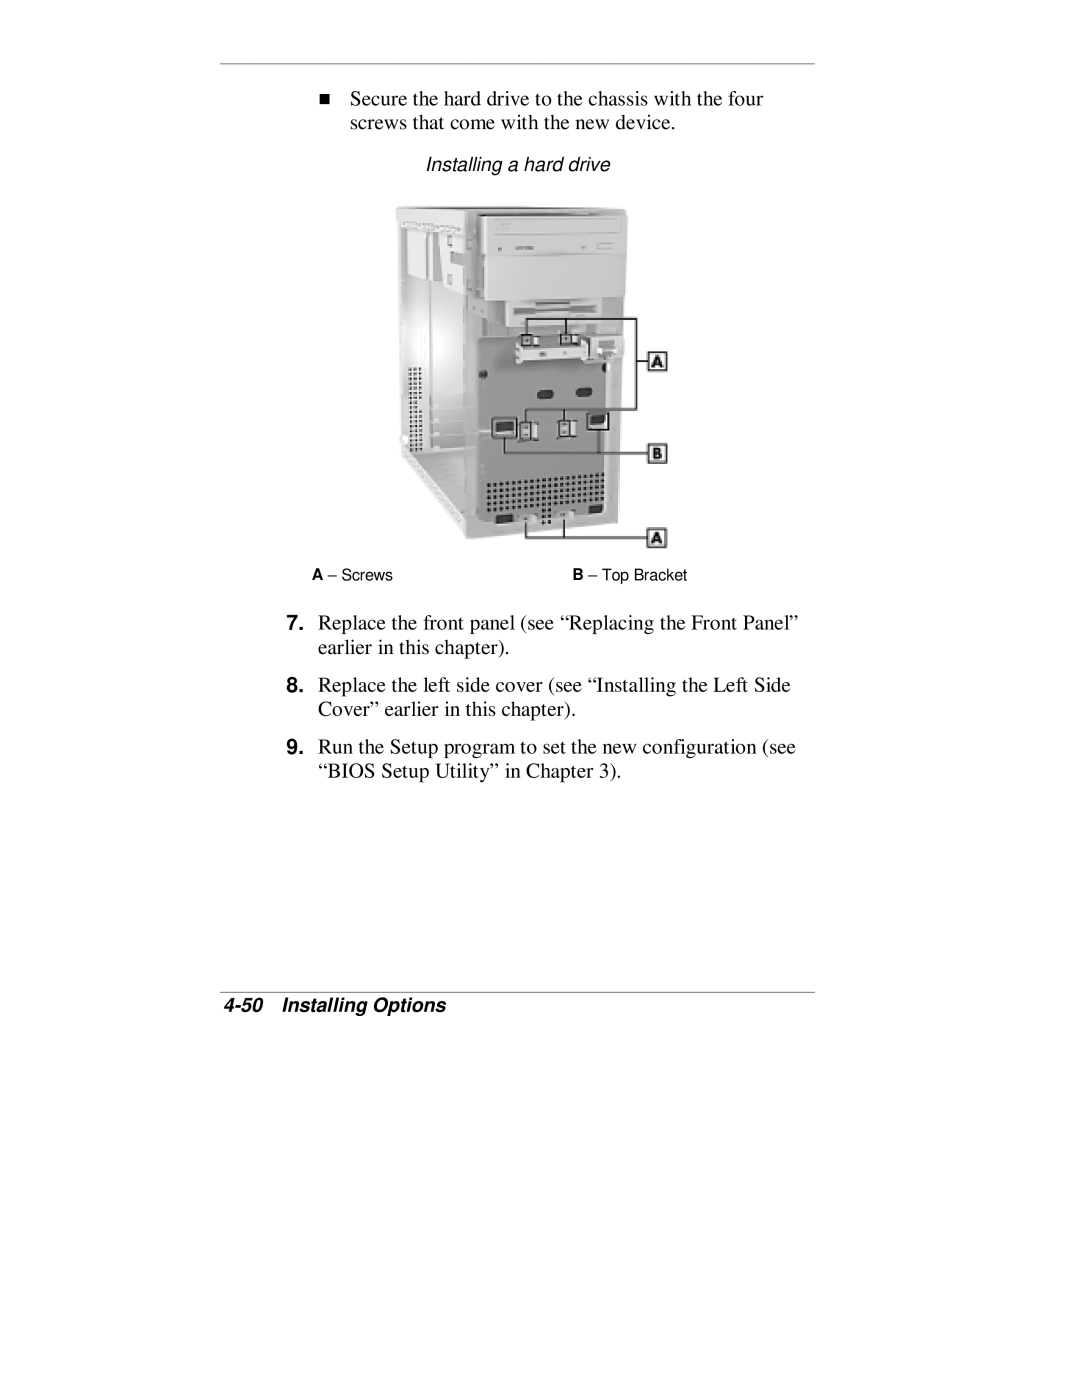 NEC VT 300 Series manual Installing a hard drive, 4-50Installing Options 